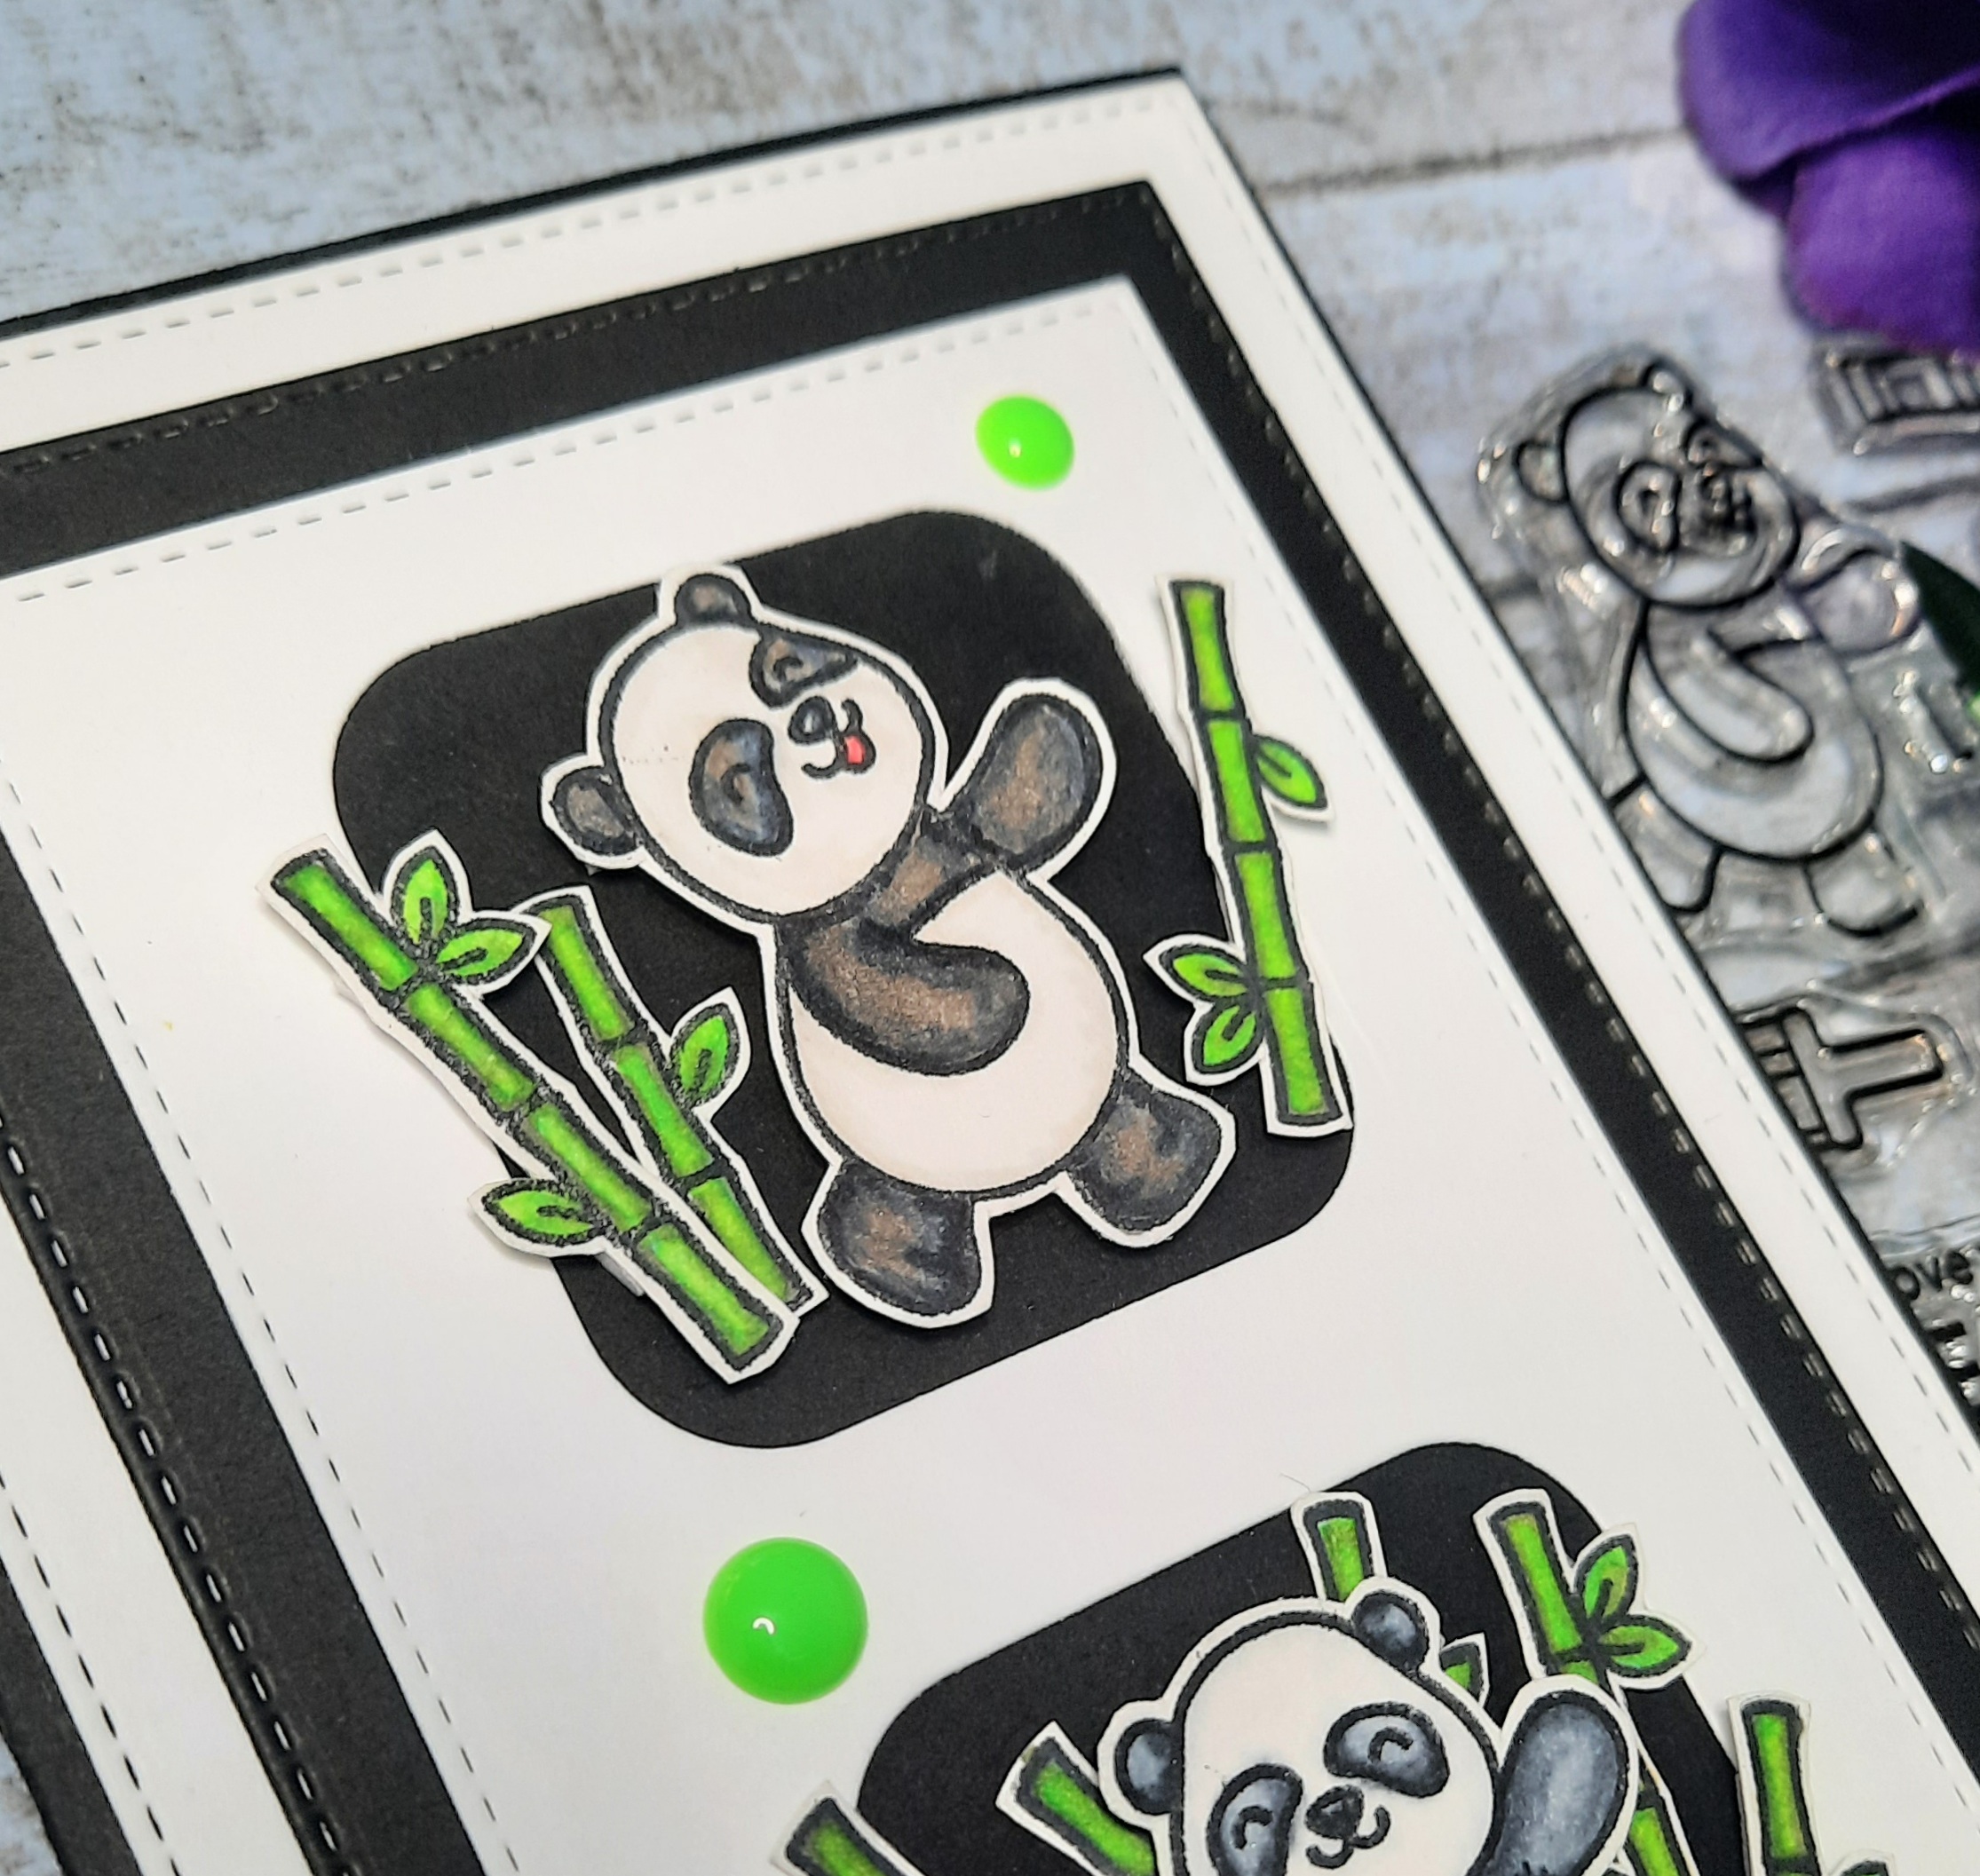 Panda image coloured with copics on a slimline card